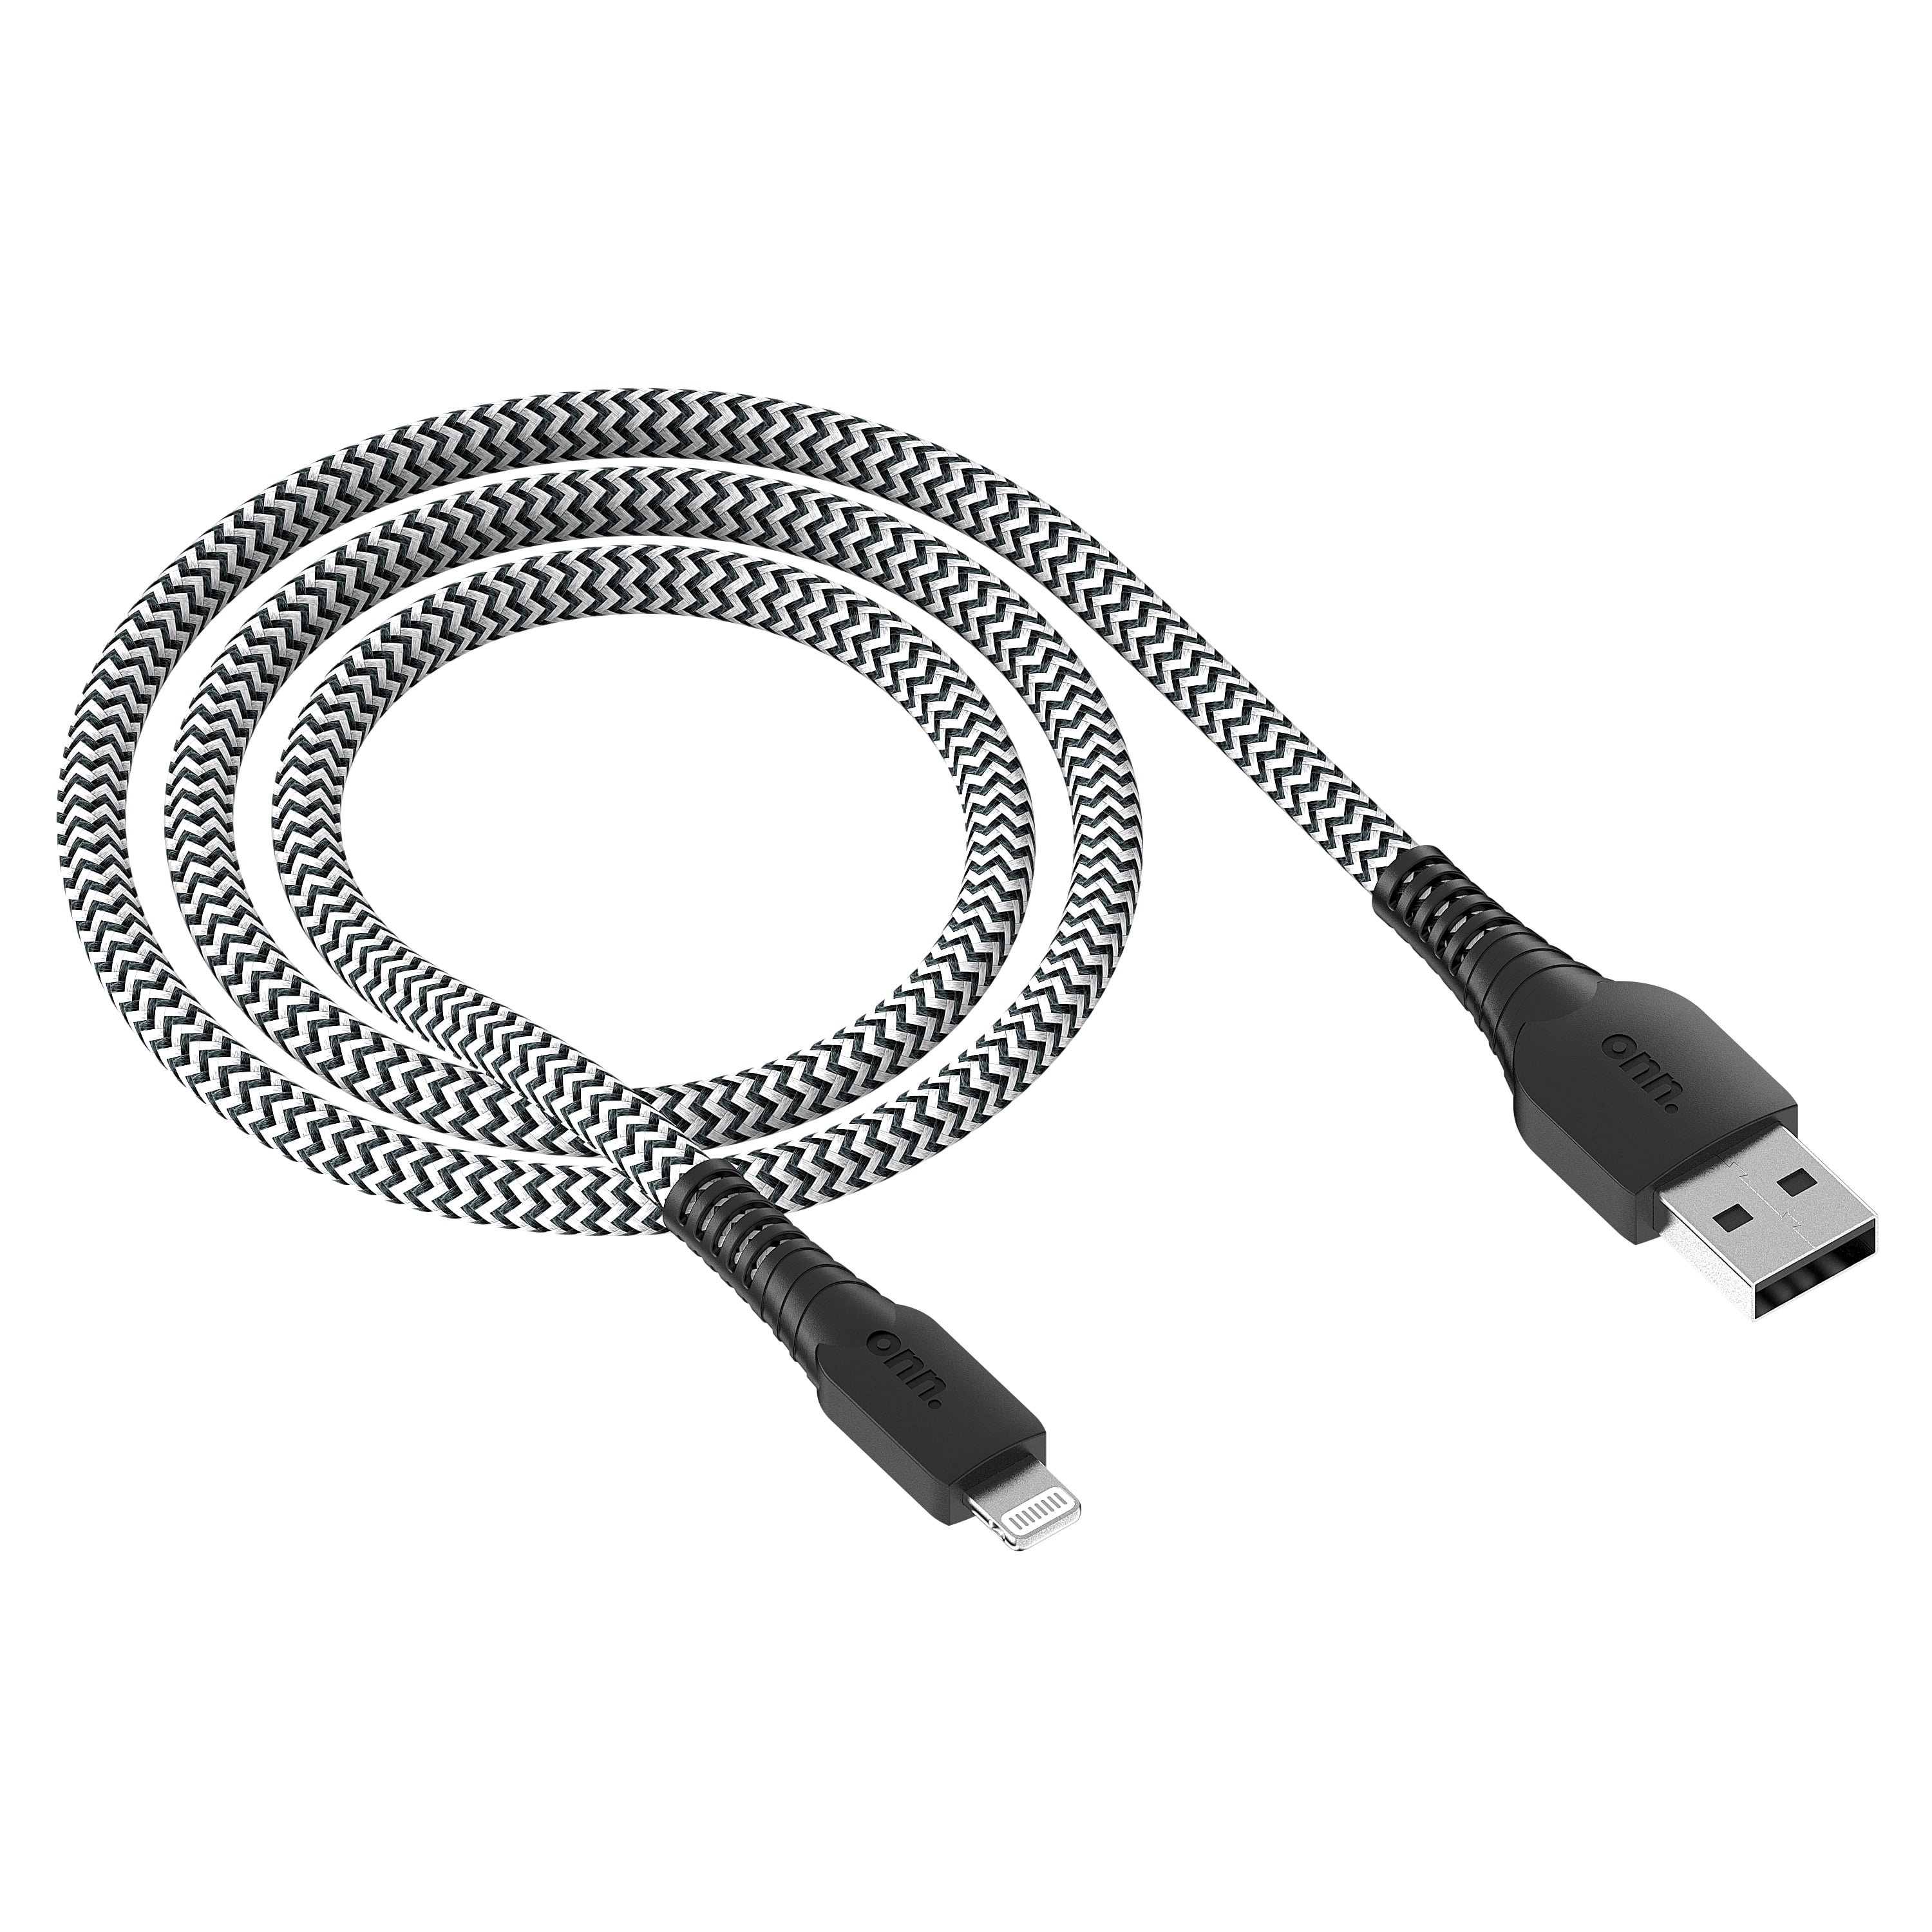 Lightning USB Cable for iPhone/iPad/iPod, - Walmart.com